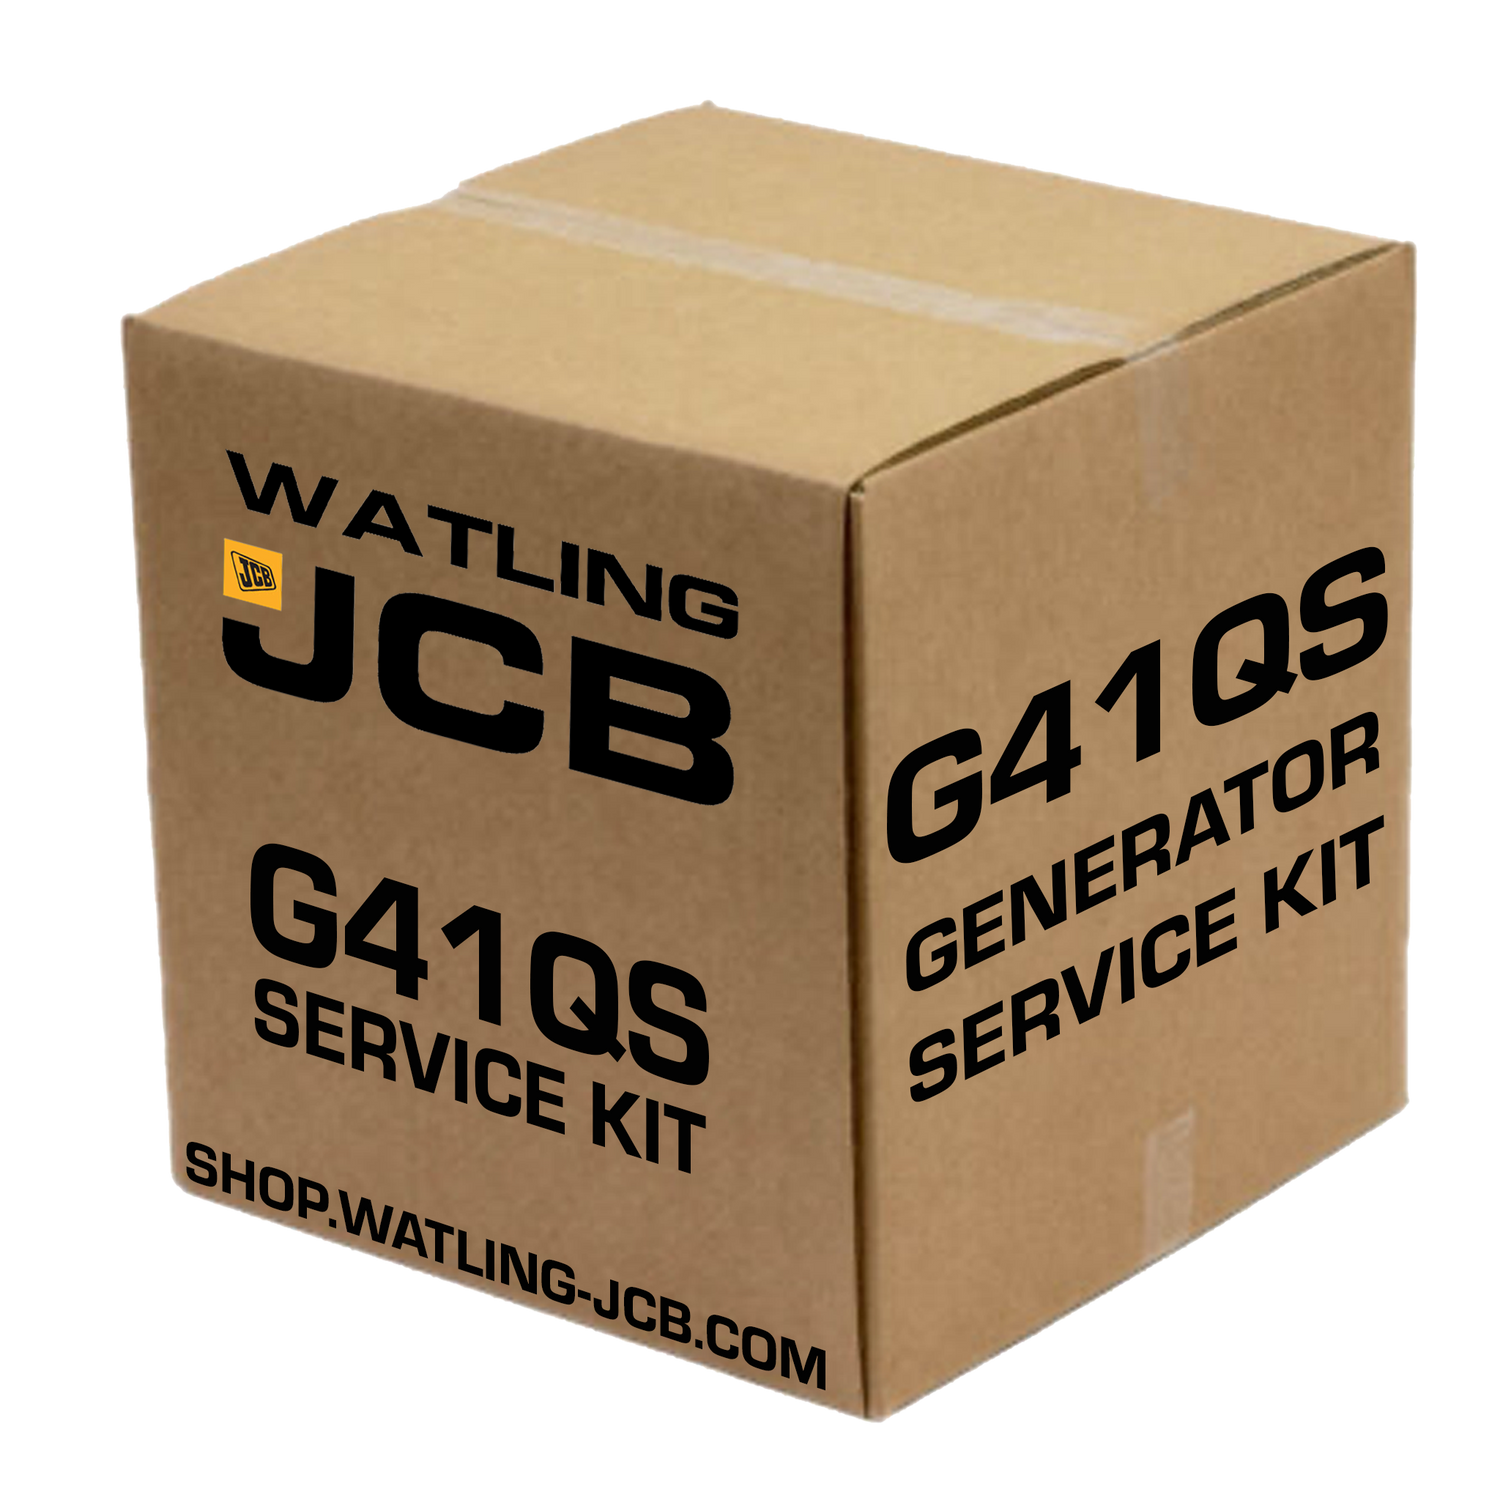 JCB G41QS Service Kits